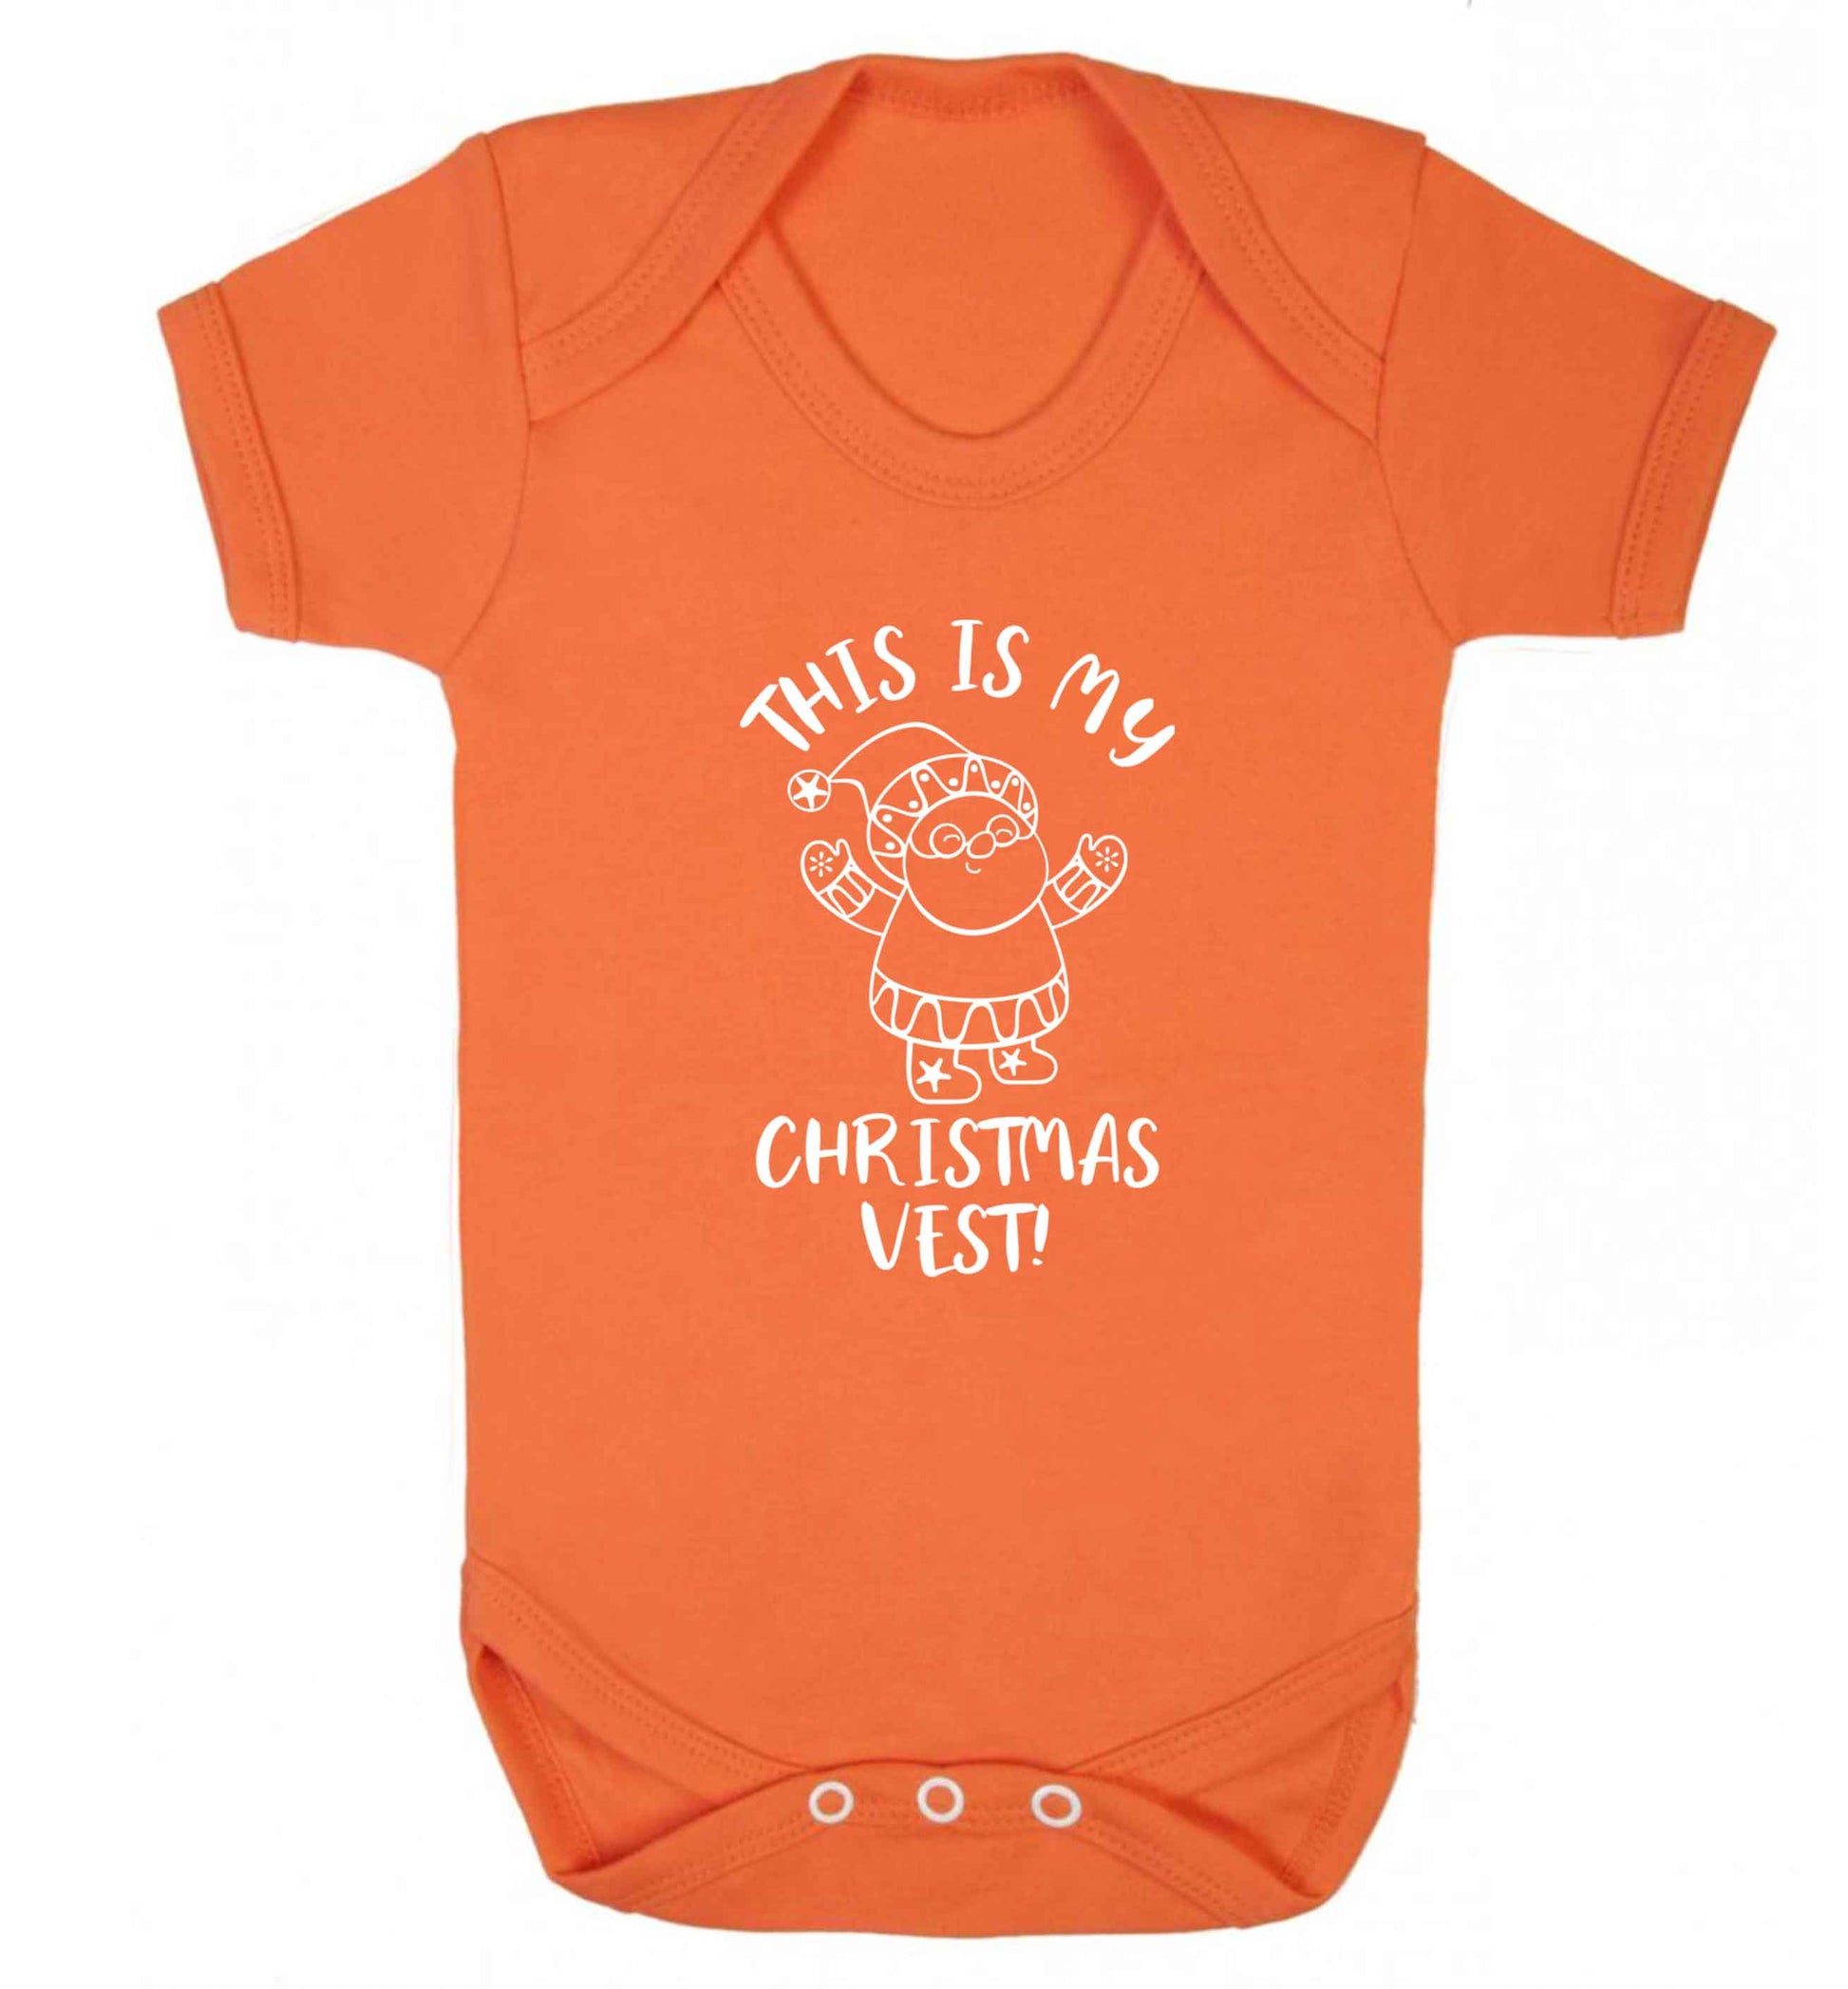 This is my Christmas vest Baby Vest orange 18-24 months